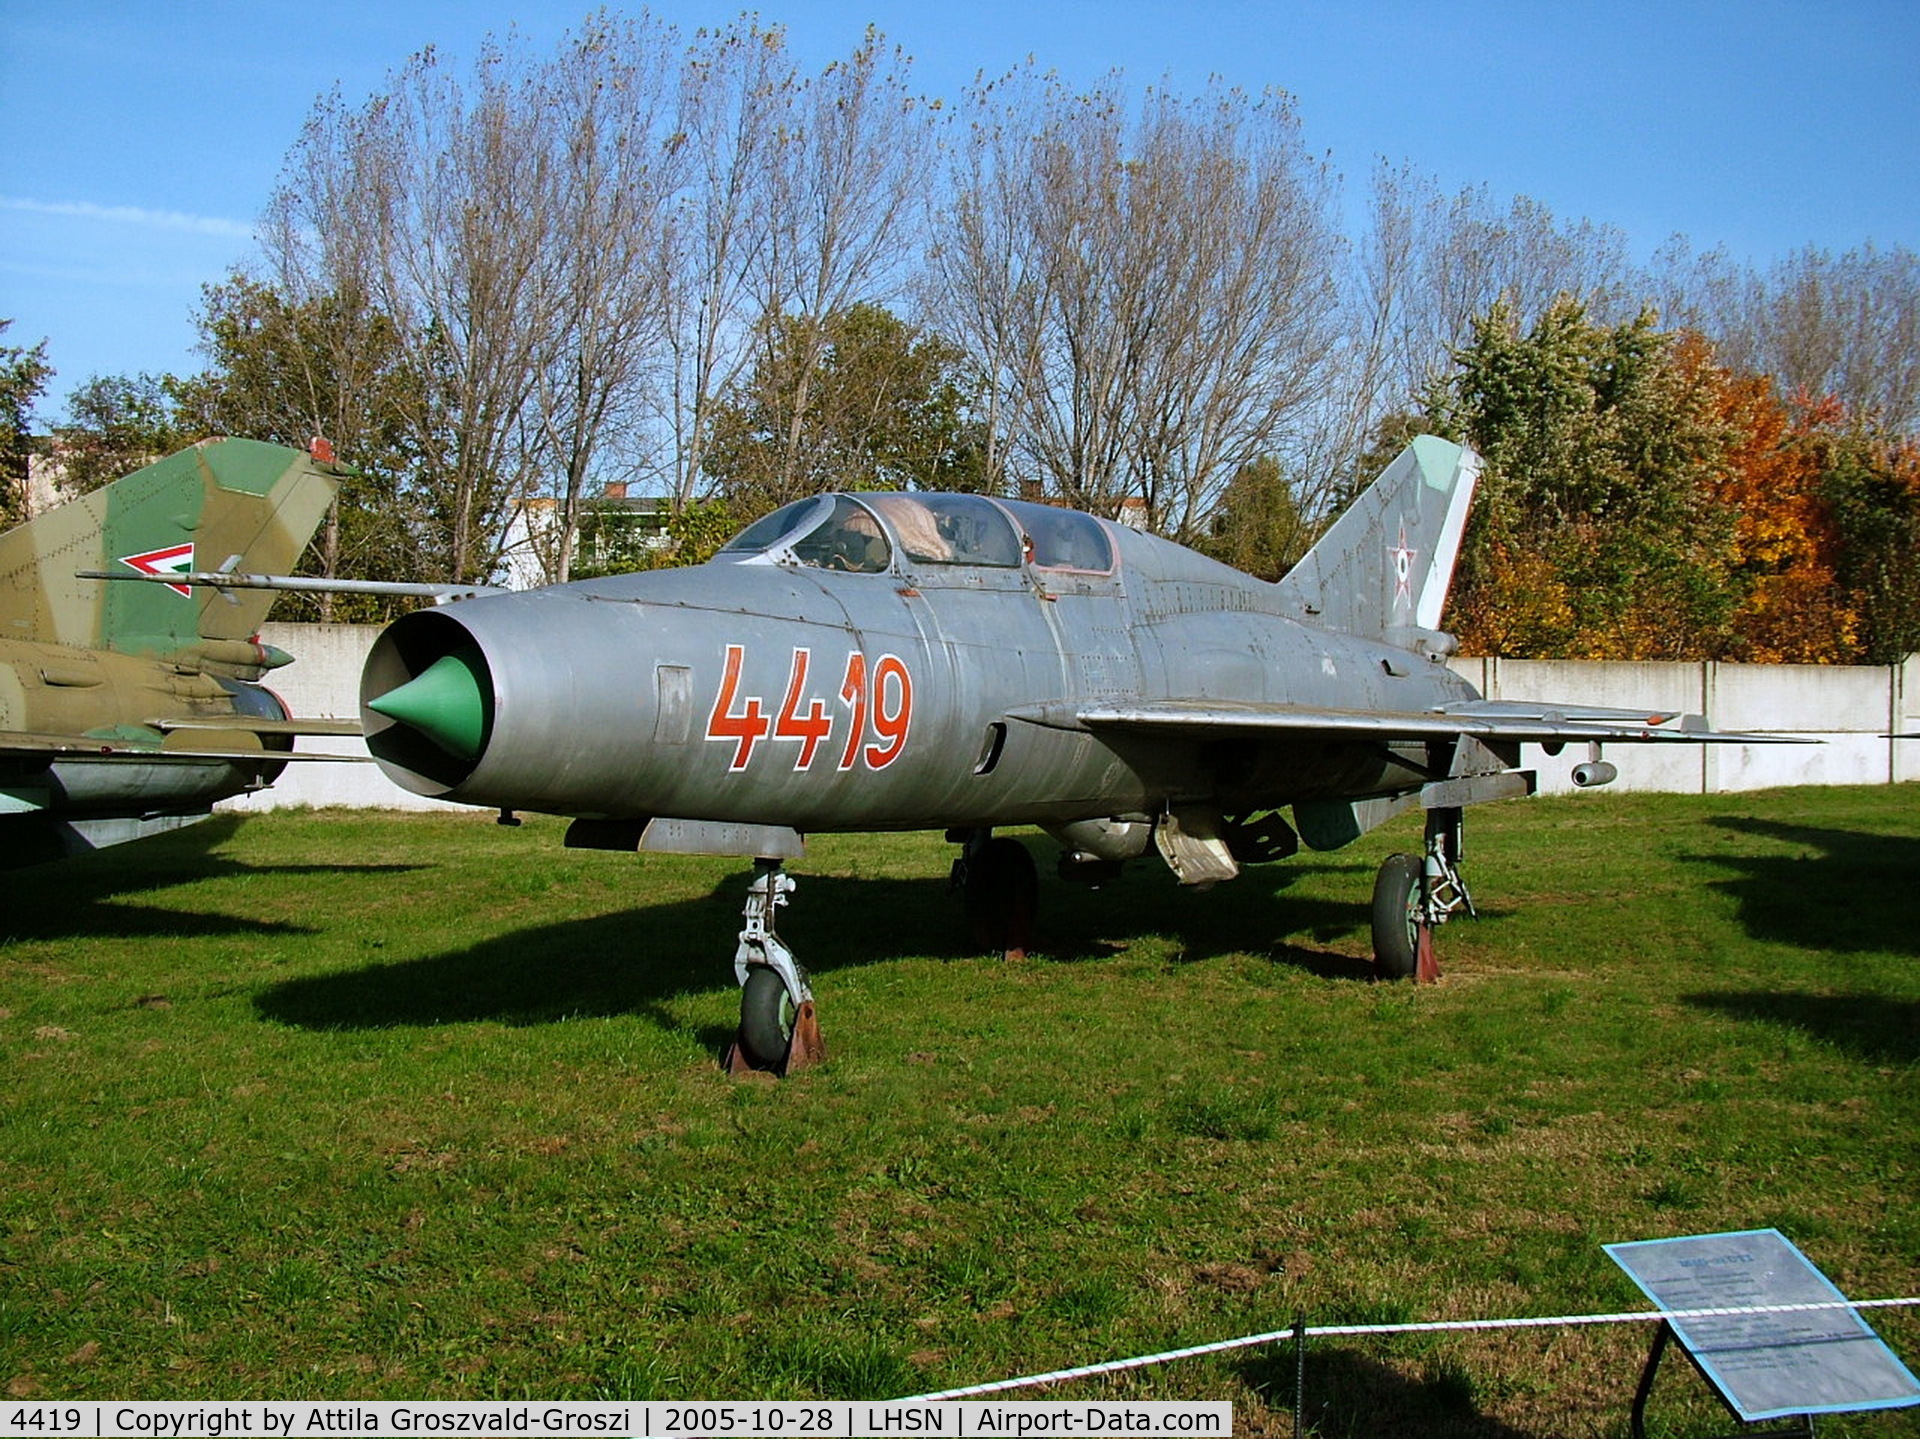 4419, 1967 Mikoyan-Gurevich MiG-21U C/N 664419, Szolnok airplane museum, Hungary